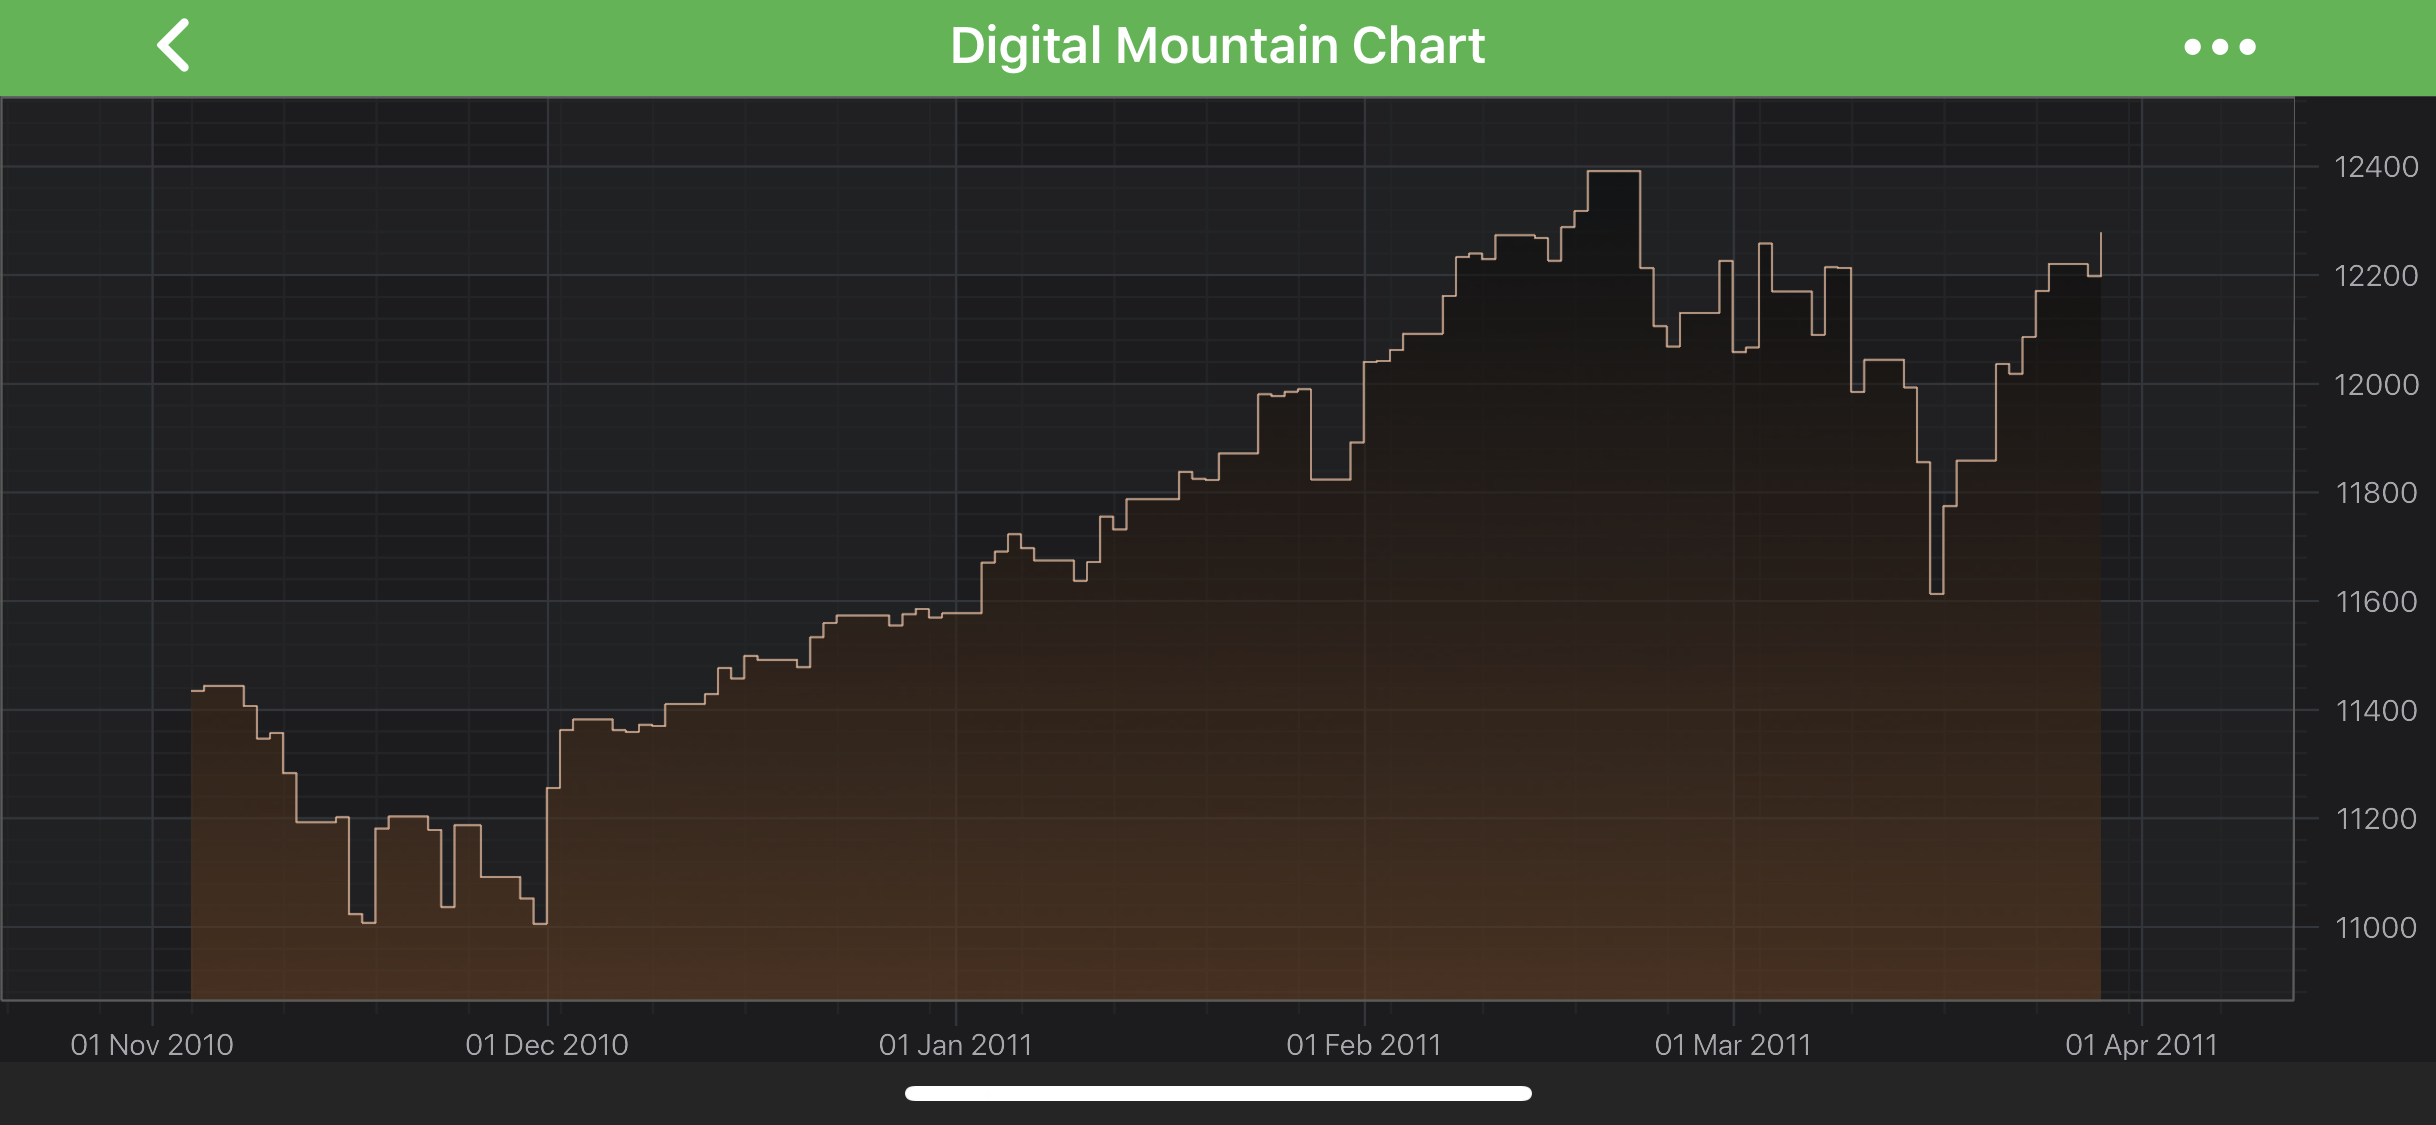 Digital Mountain Series Type